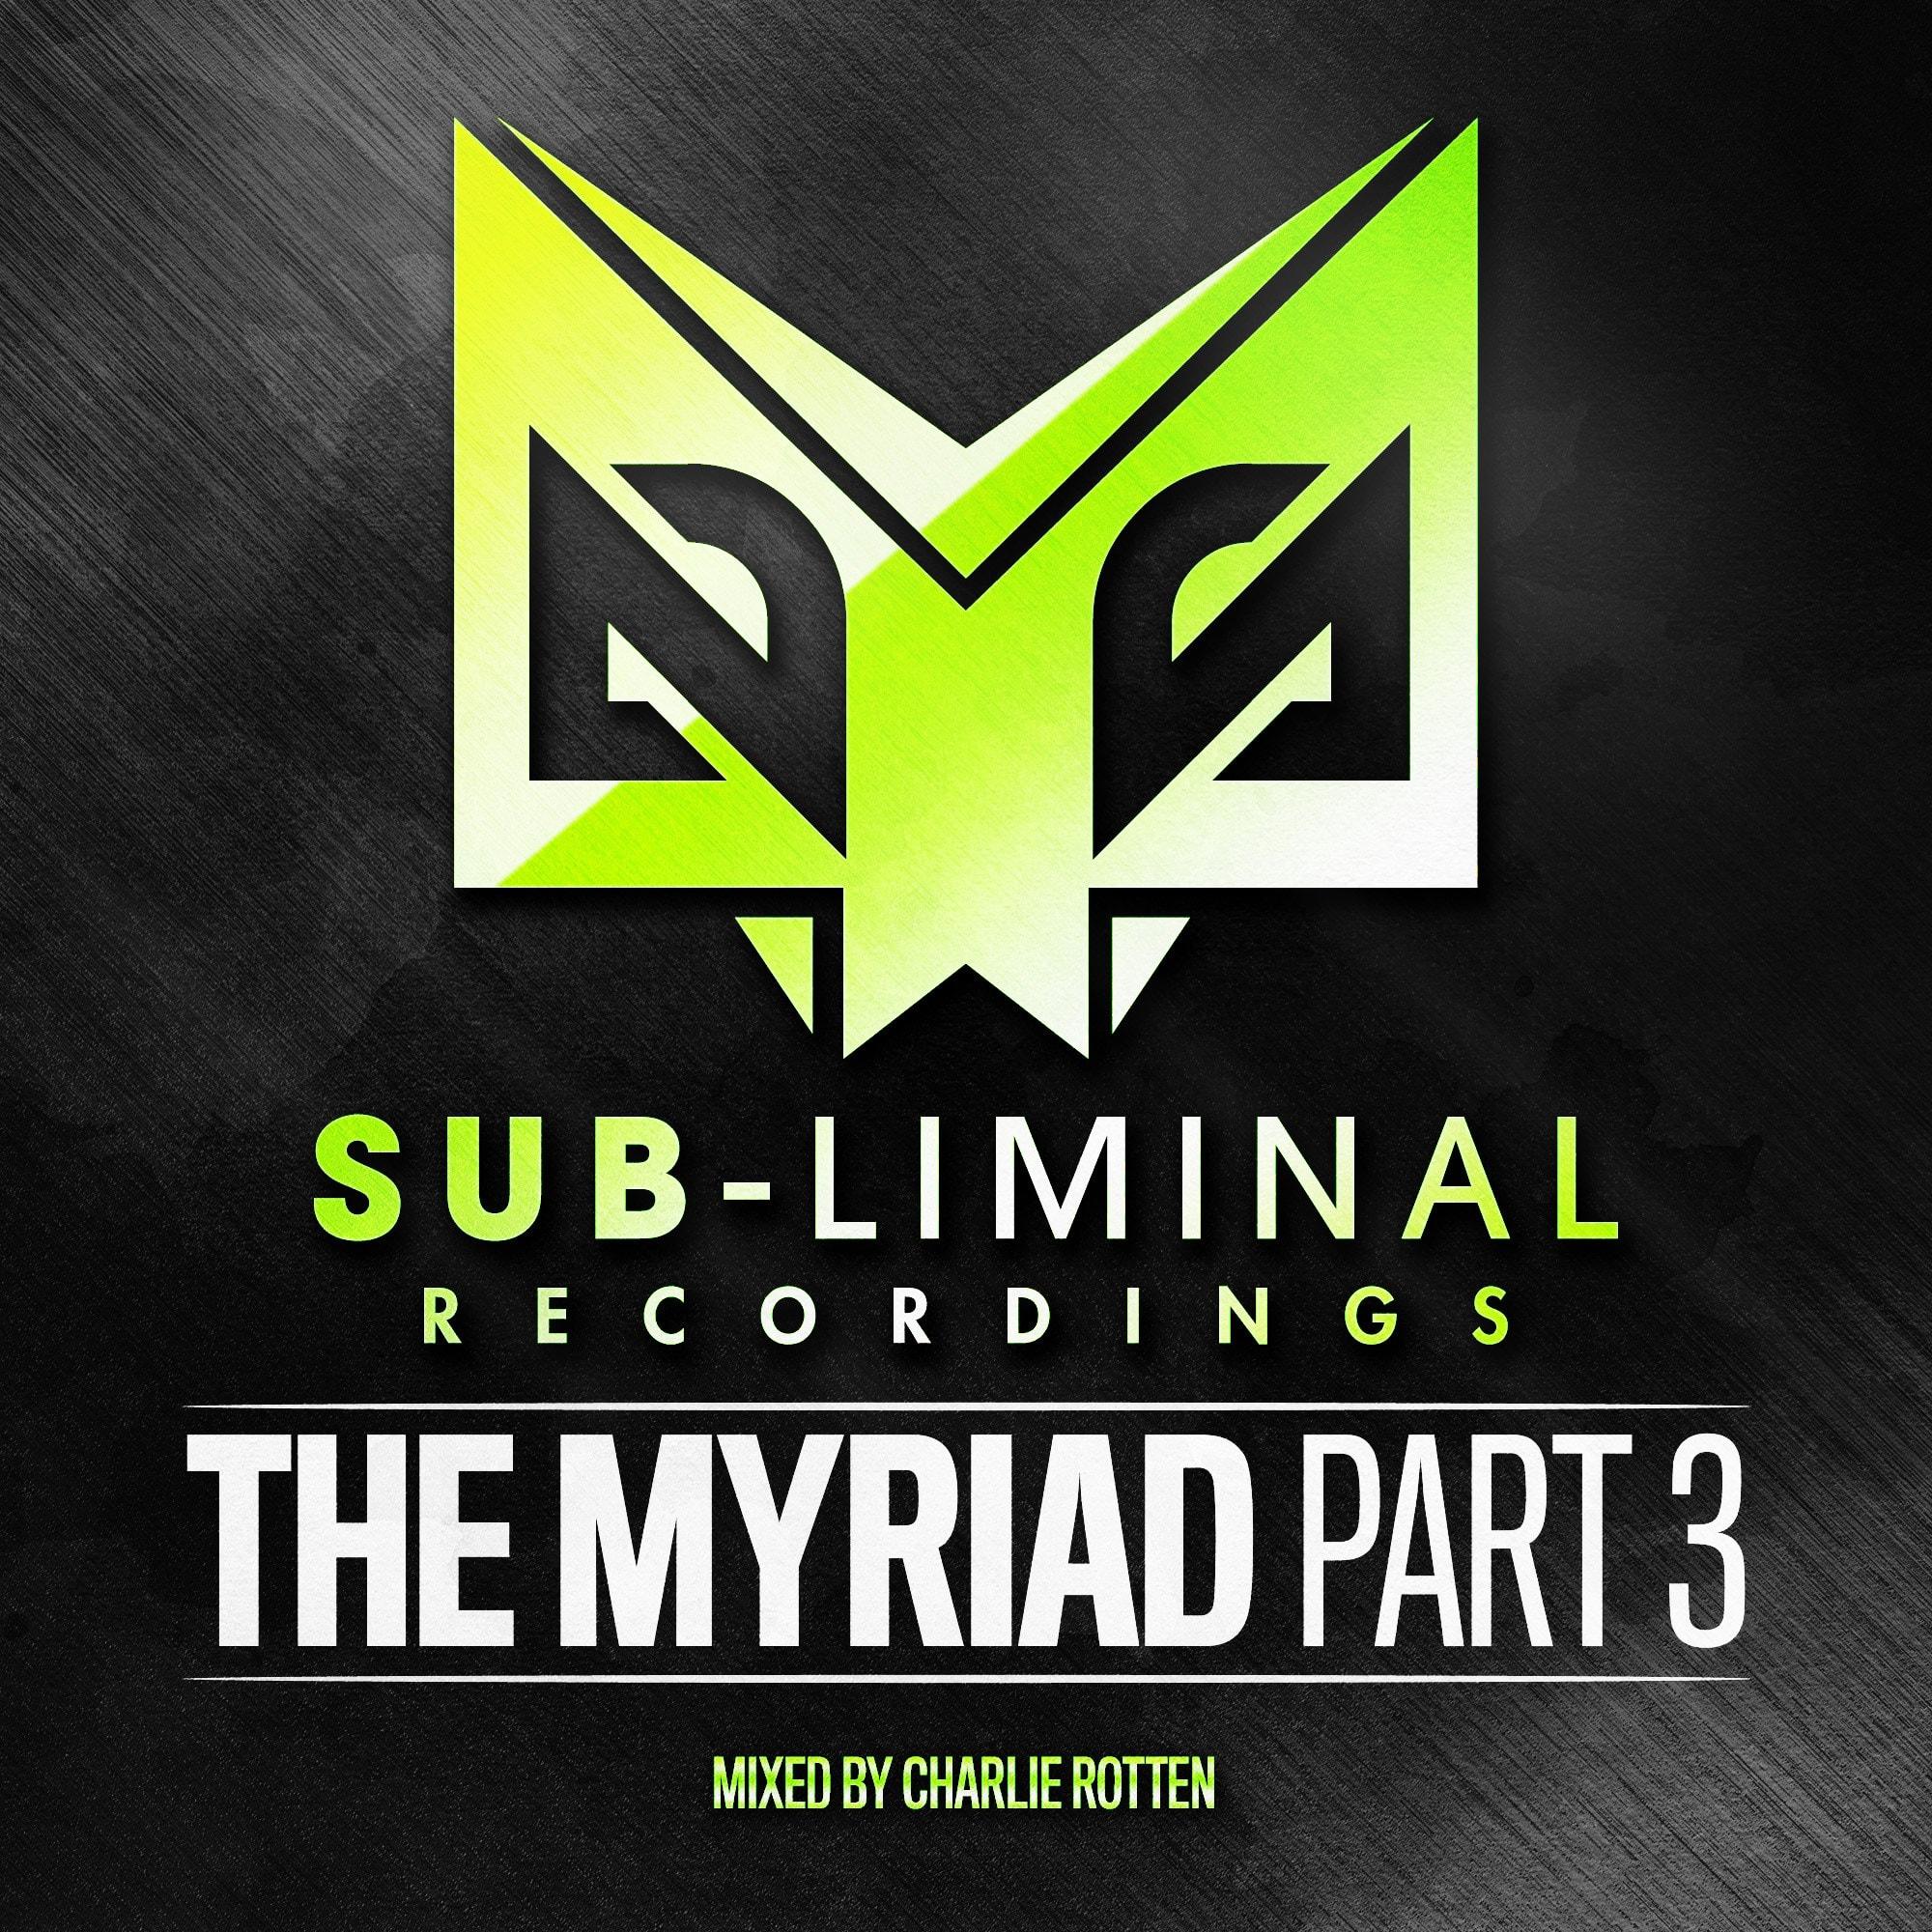 The Myriad Part 3 - Continuous DJ mix